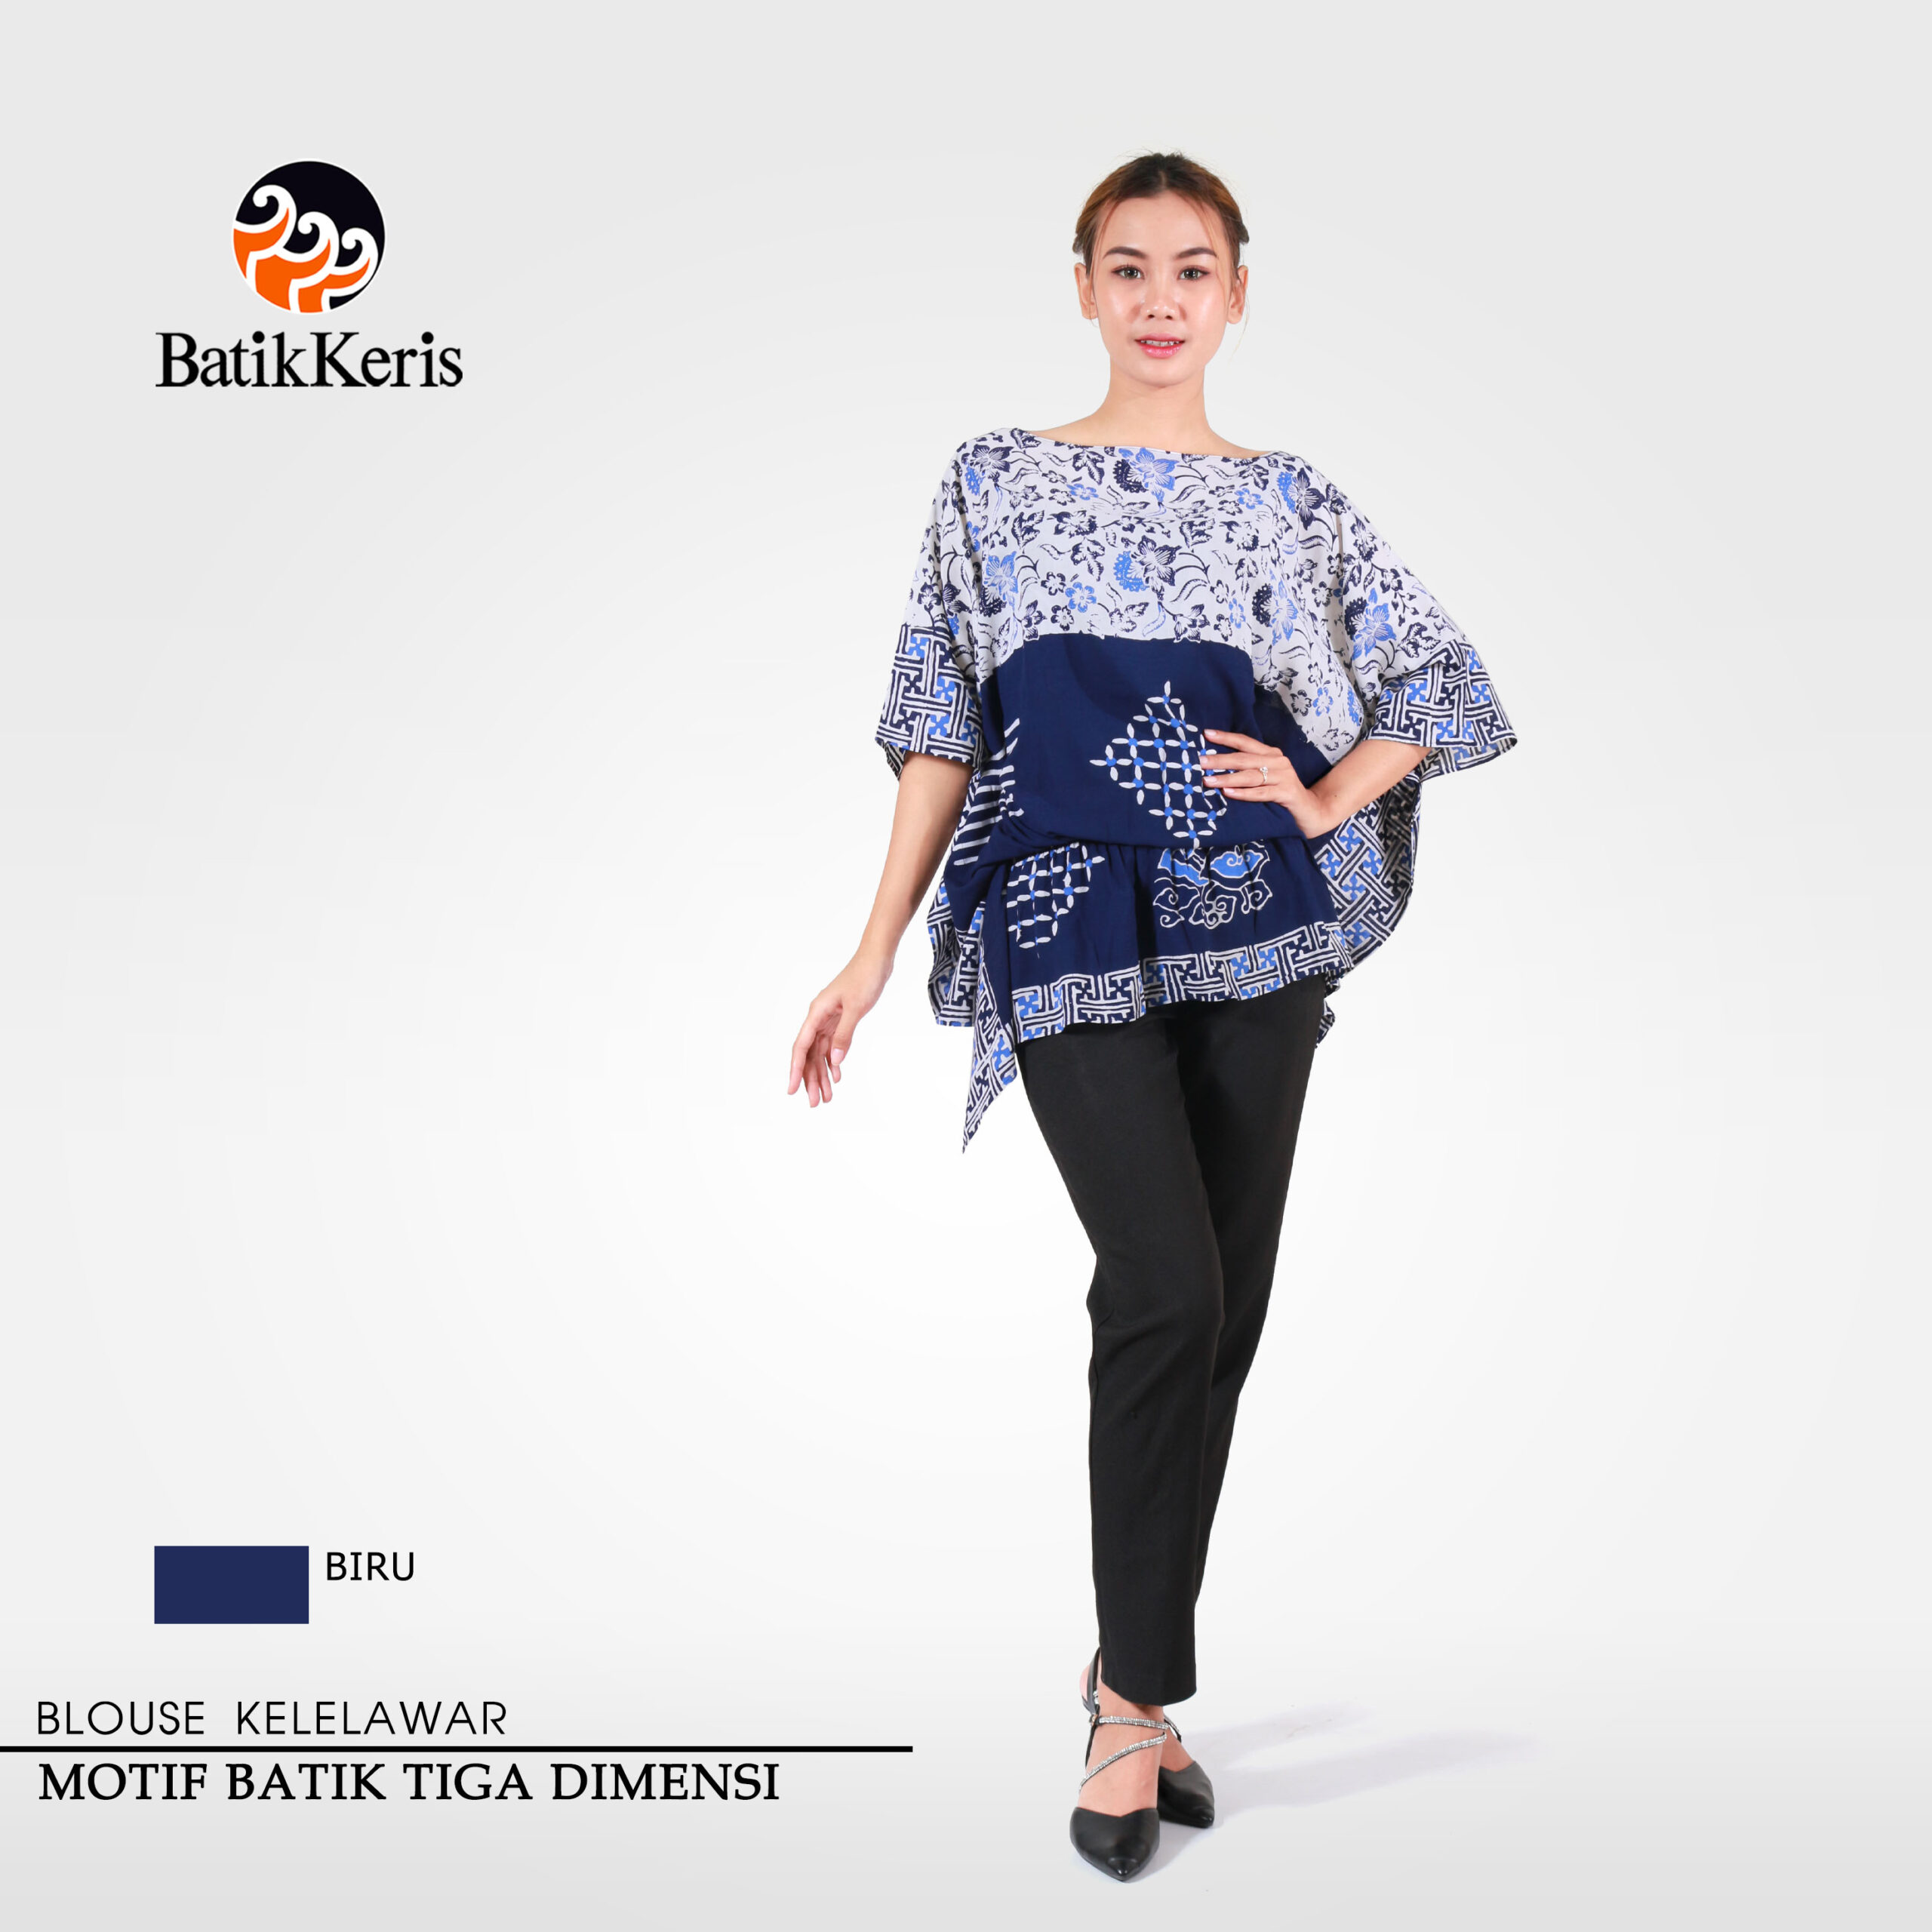 Blouse Kelelawar Batik Motif Batik Tiga Dimensi Batik Keris Online 